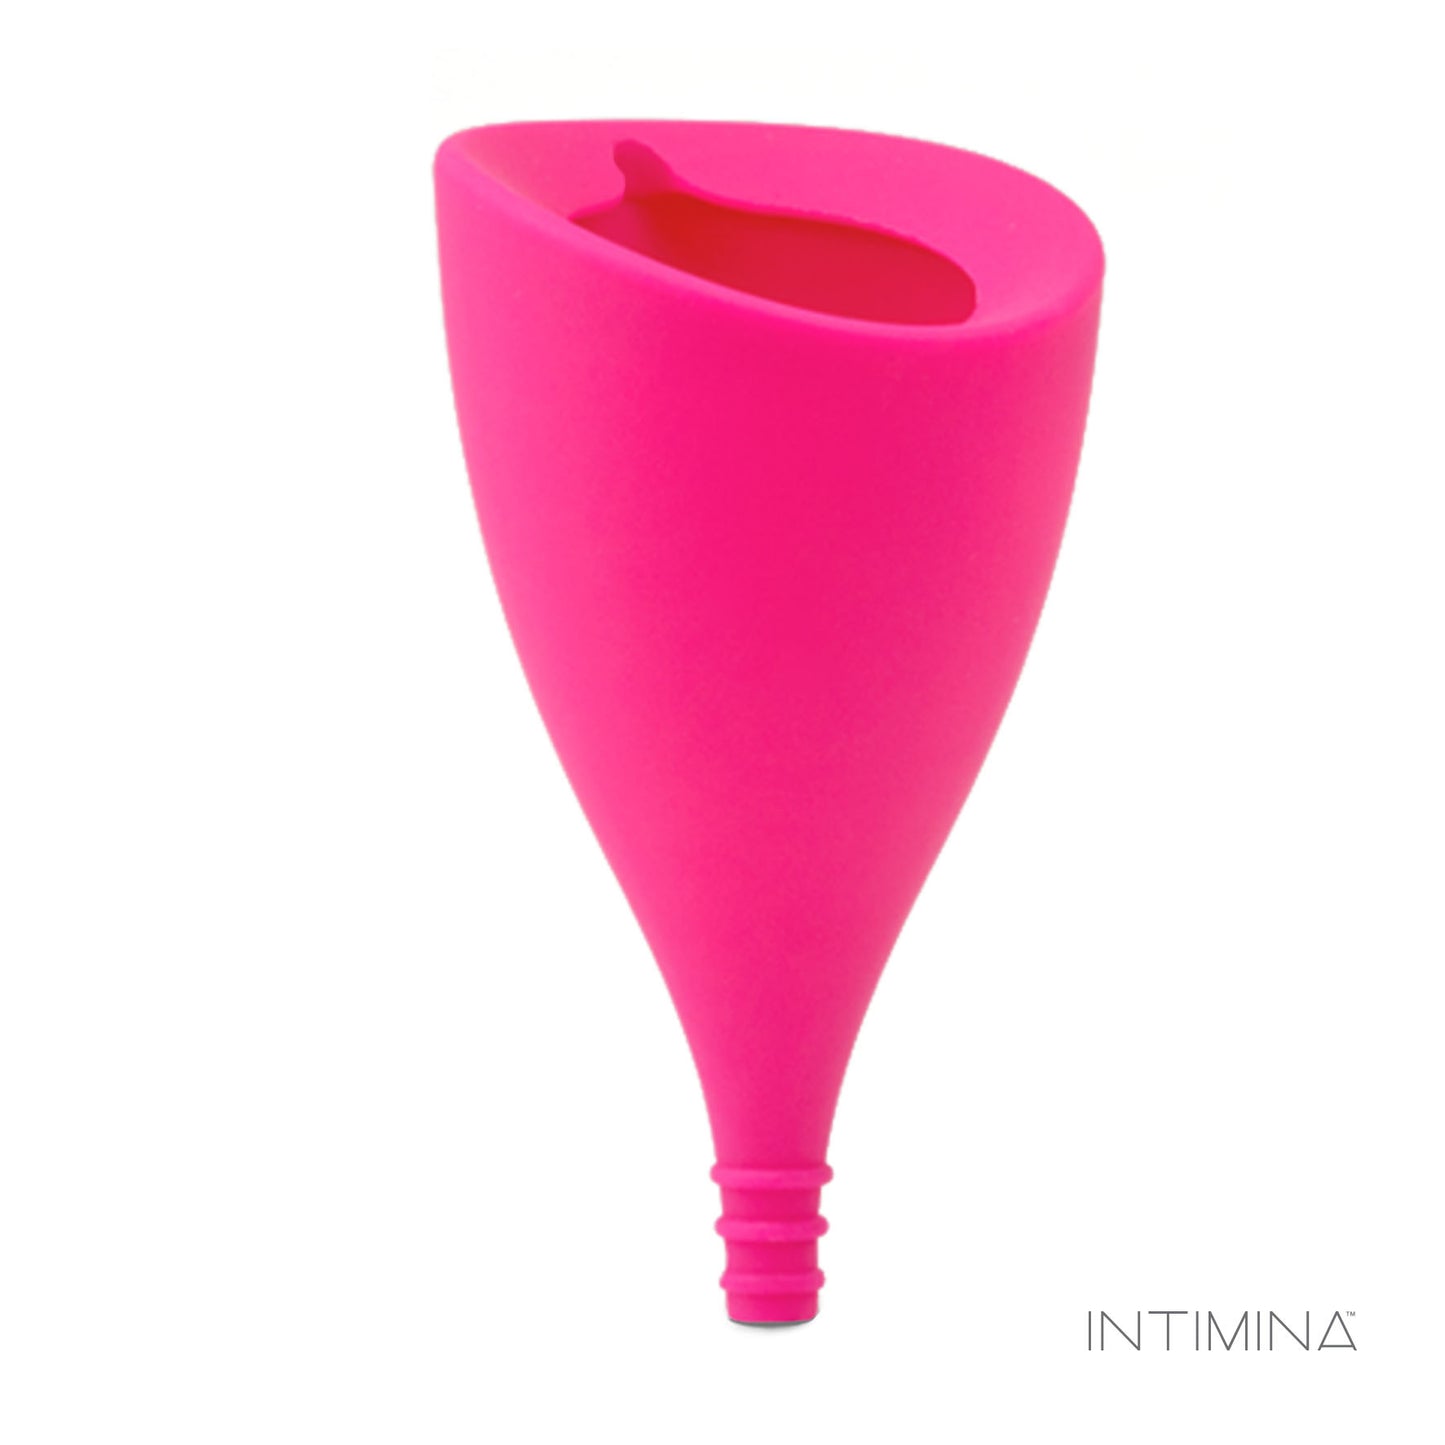 Intimina Lily Cup - Original Size B - Happeriod